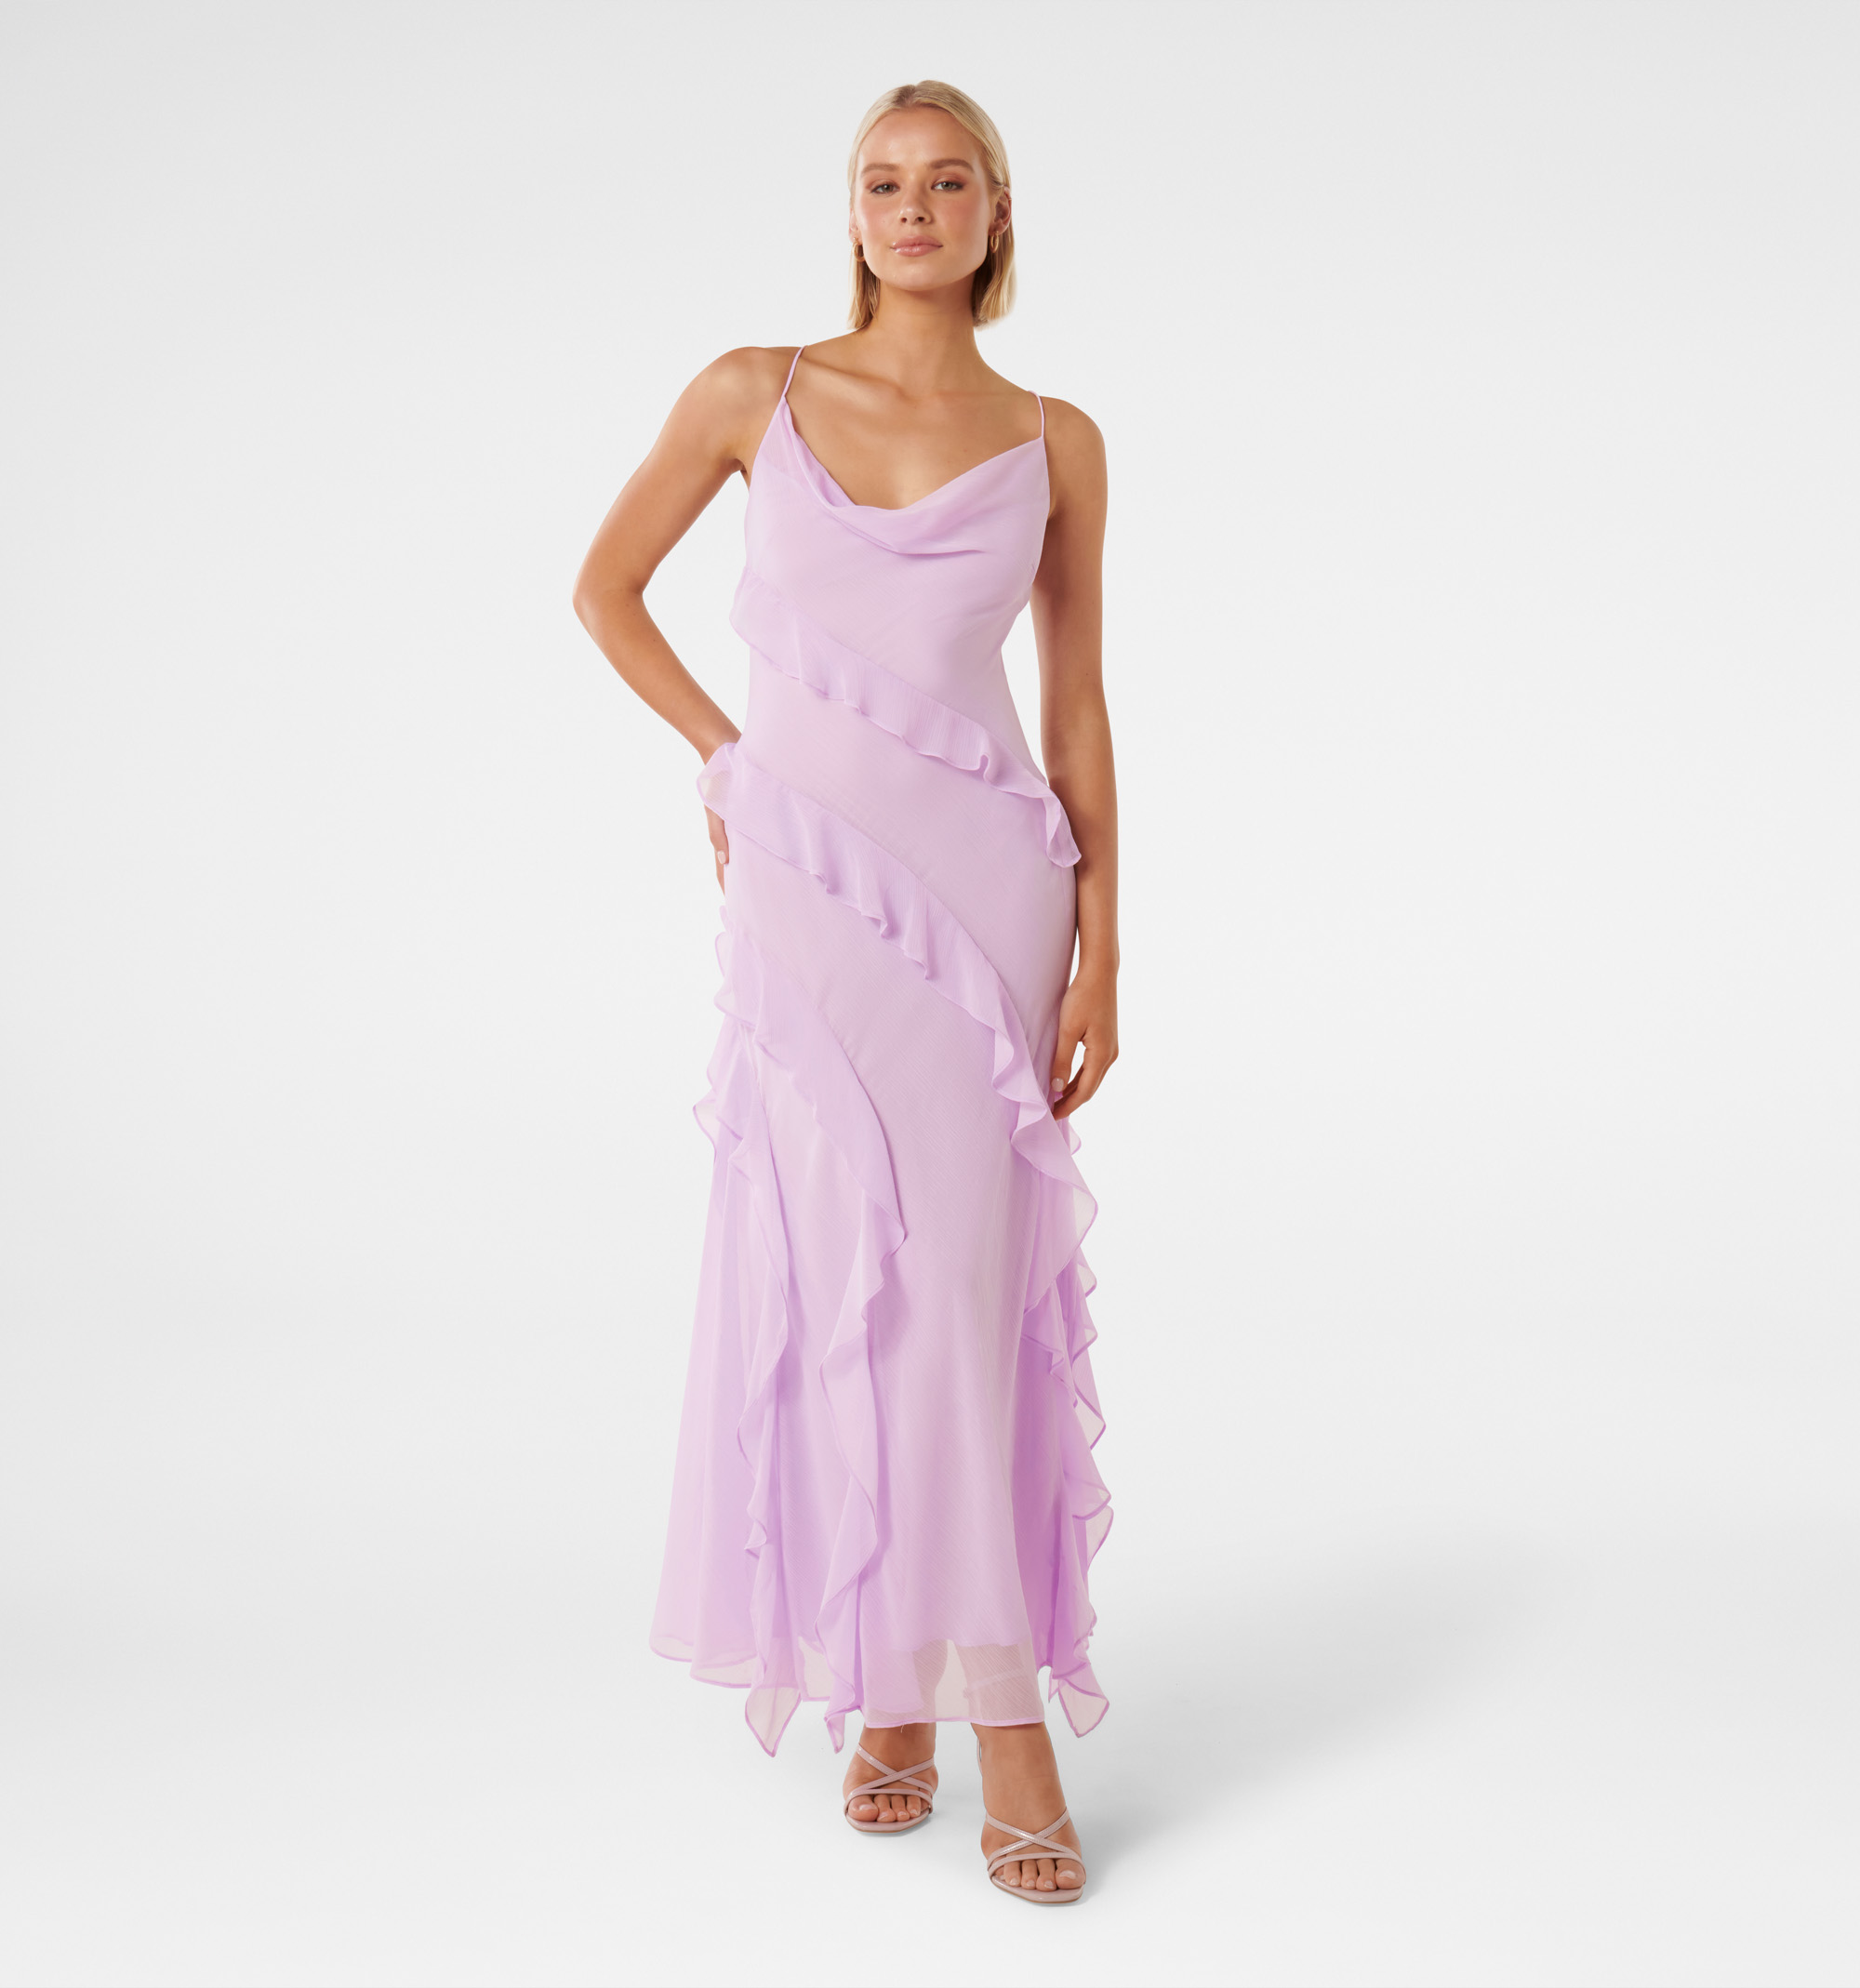 Plus Size Dress - Give it Glamour Ruffle Neck Dress - LotusLane